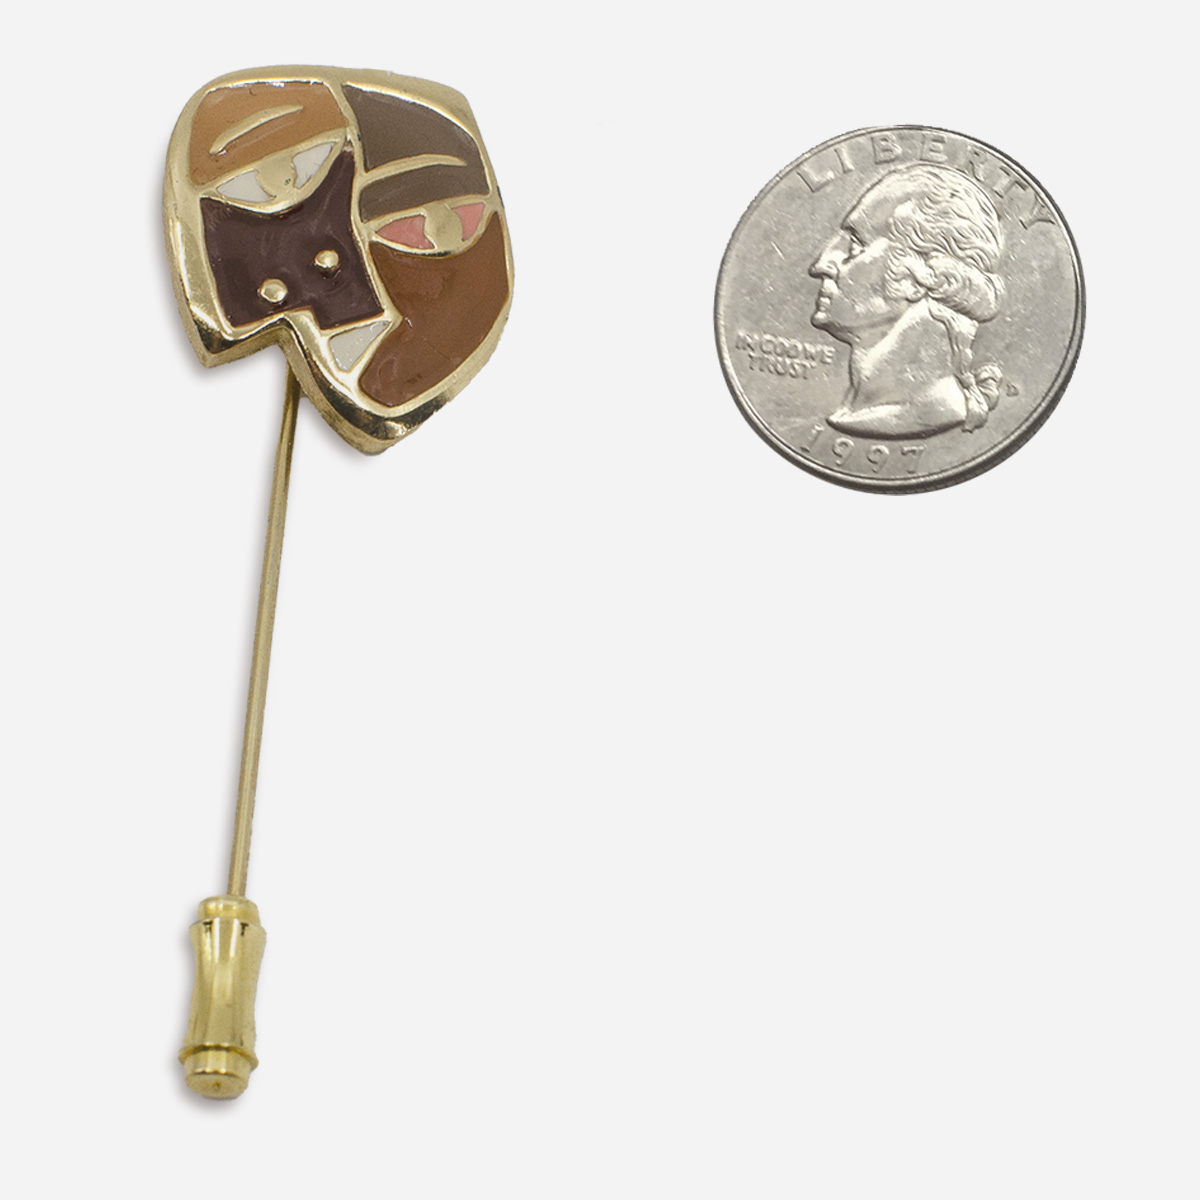 1970s vintage stick pin